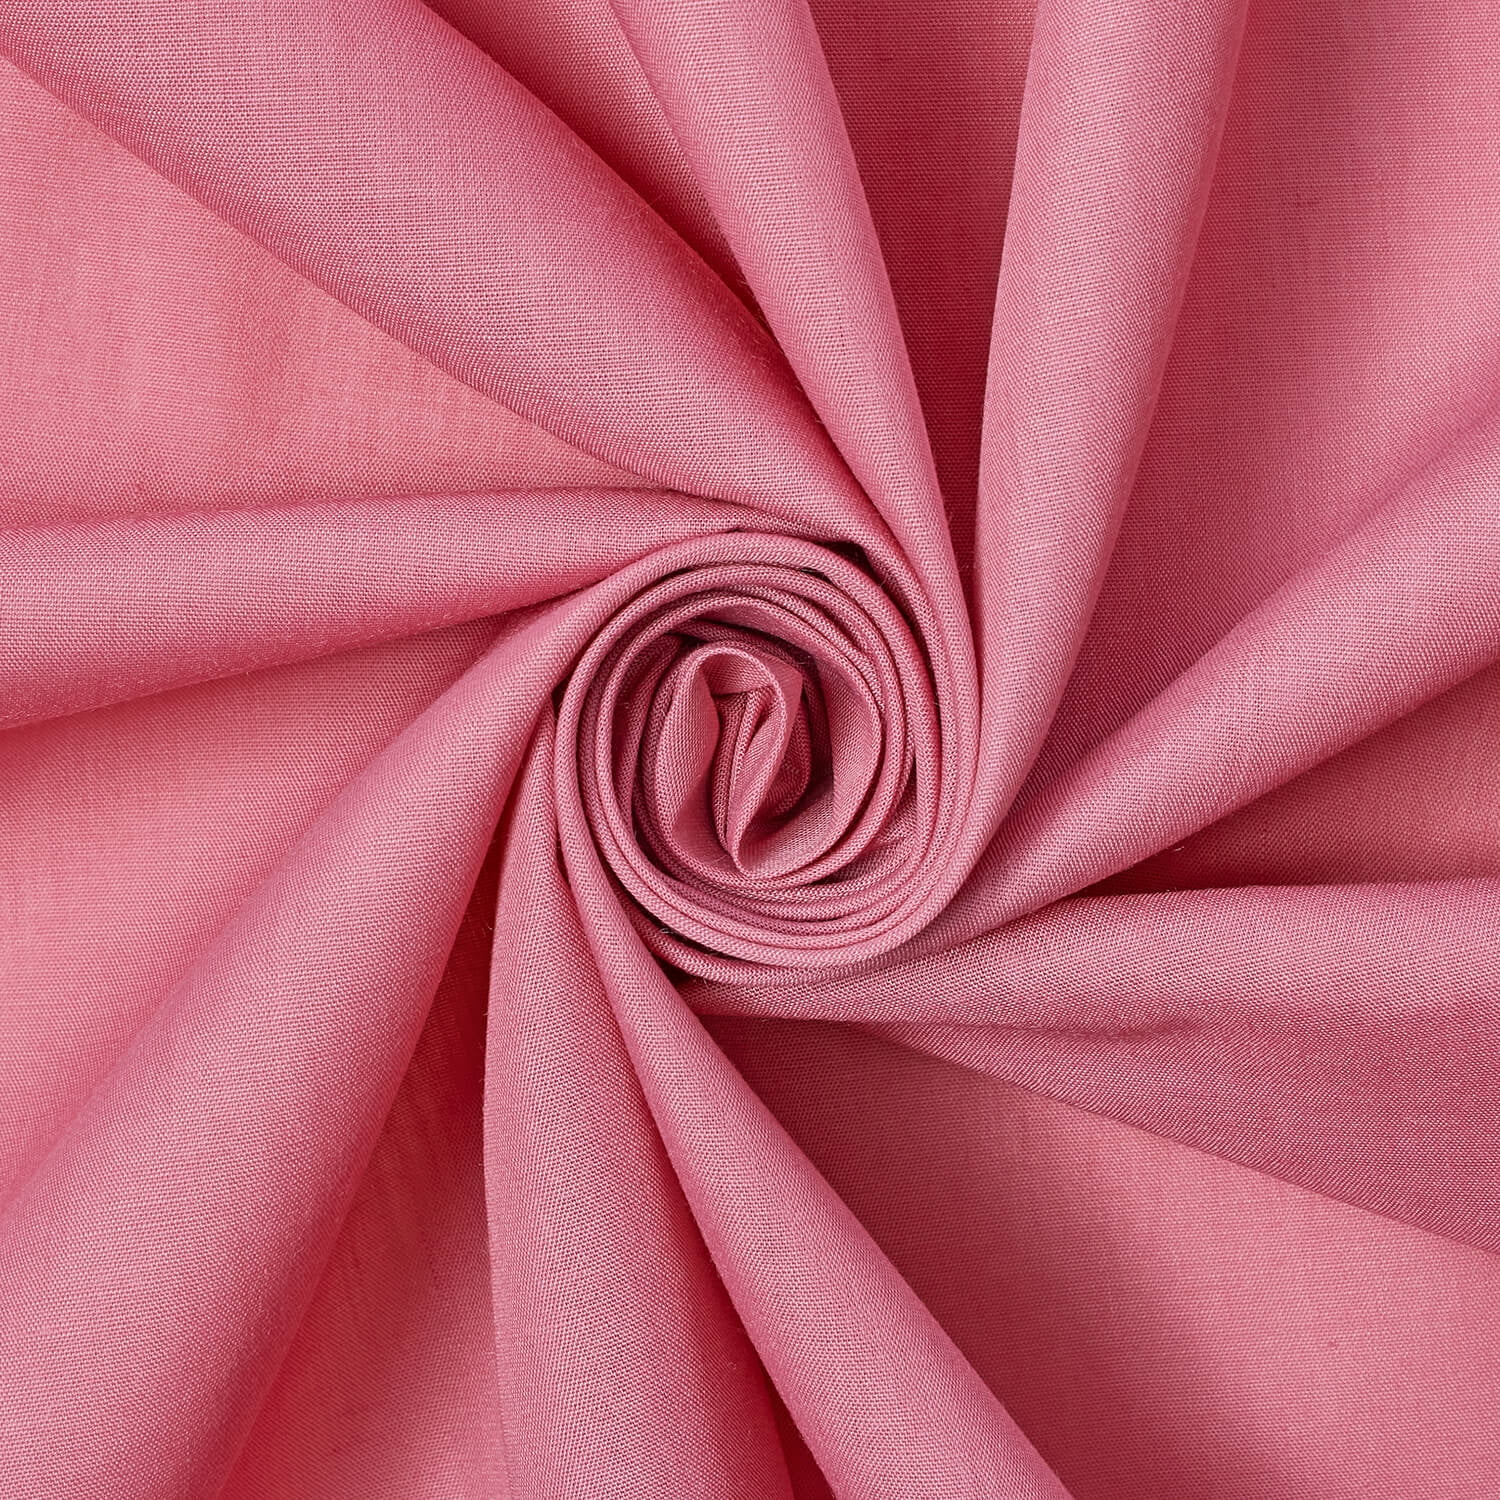 Cotton Polyester Broadcloth Fabric Premium Apparel Quilting 45 (Aqua Green)